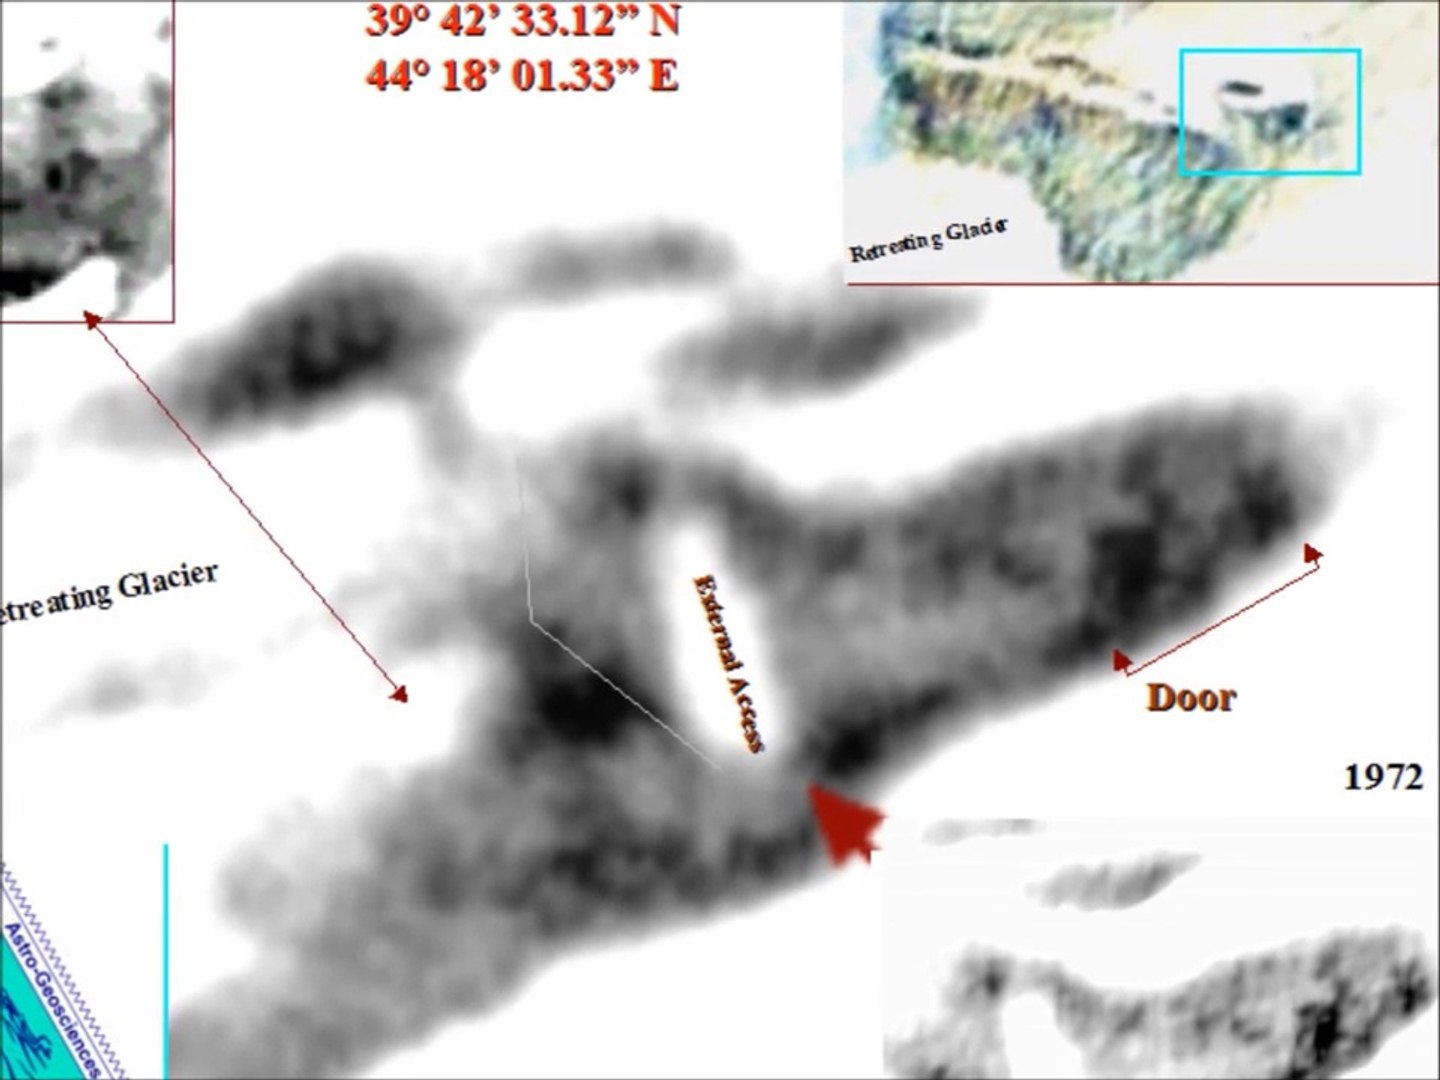 Noah S Ark Exact Coordinates On Mt Ararat 39 42 33 07 N 44 18 1 26 E 15 532 Ft 4 734 M Video Dailymotion